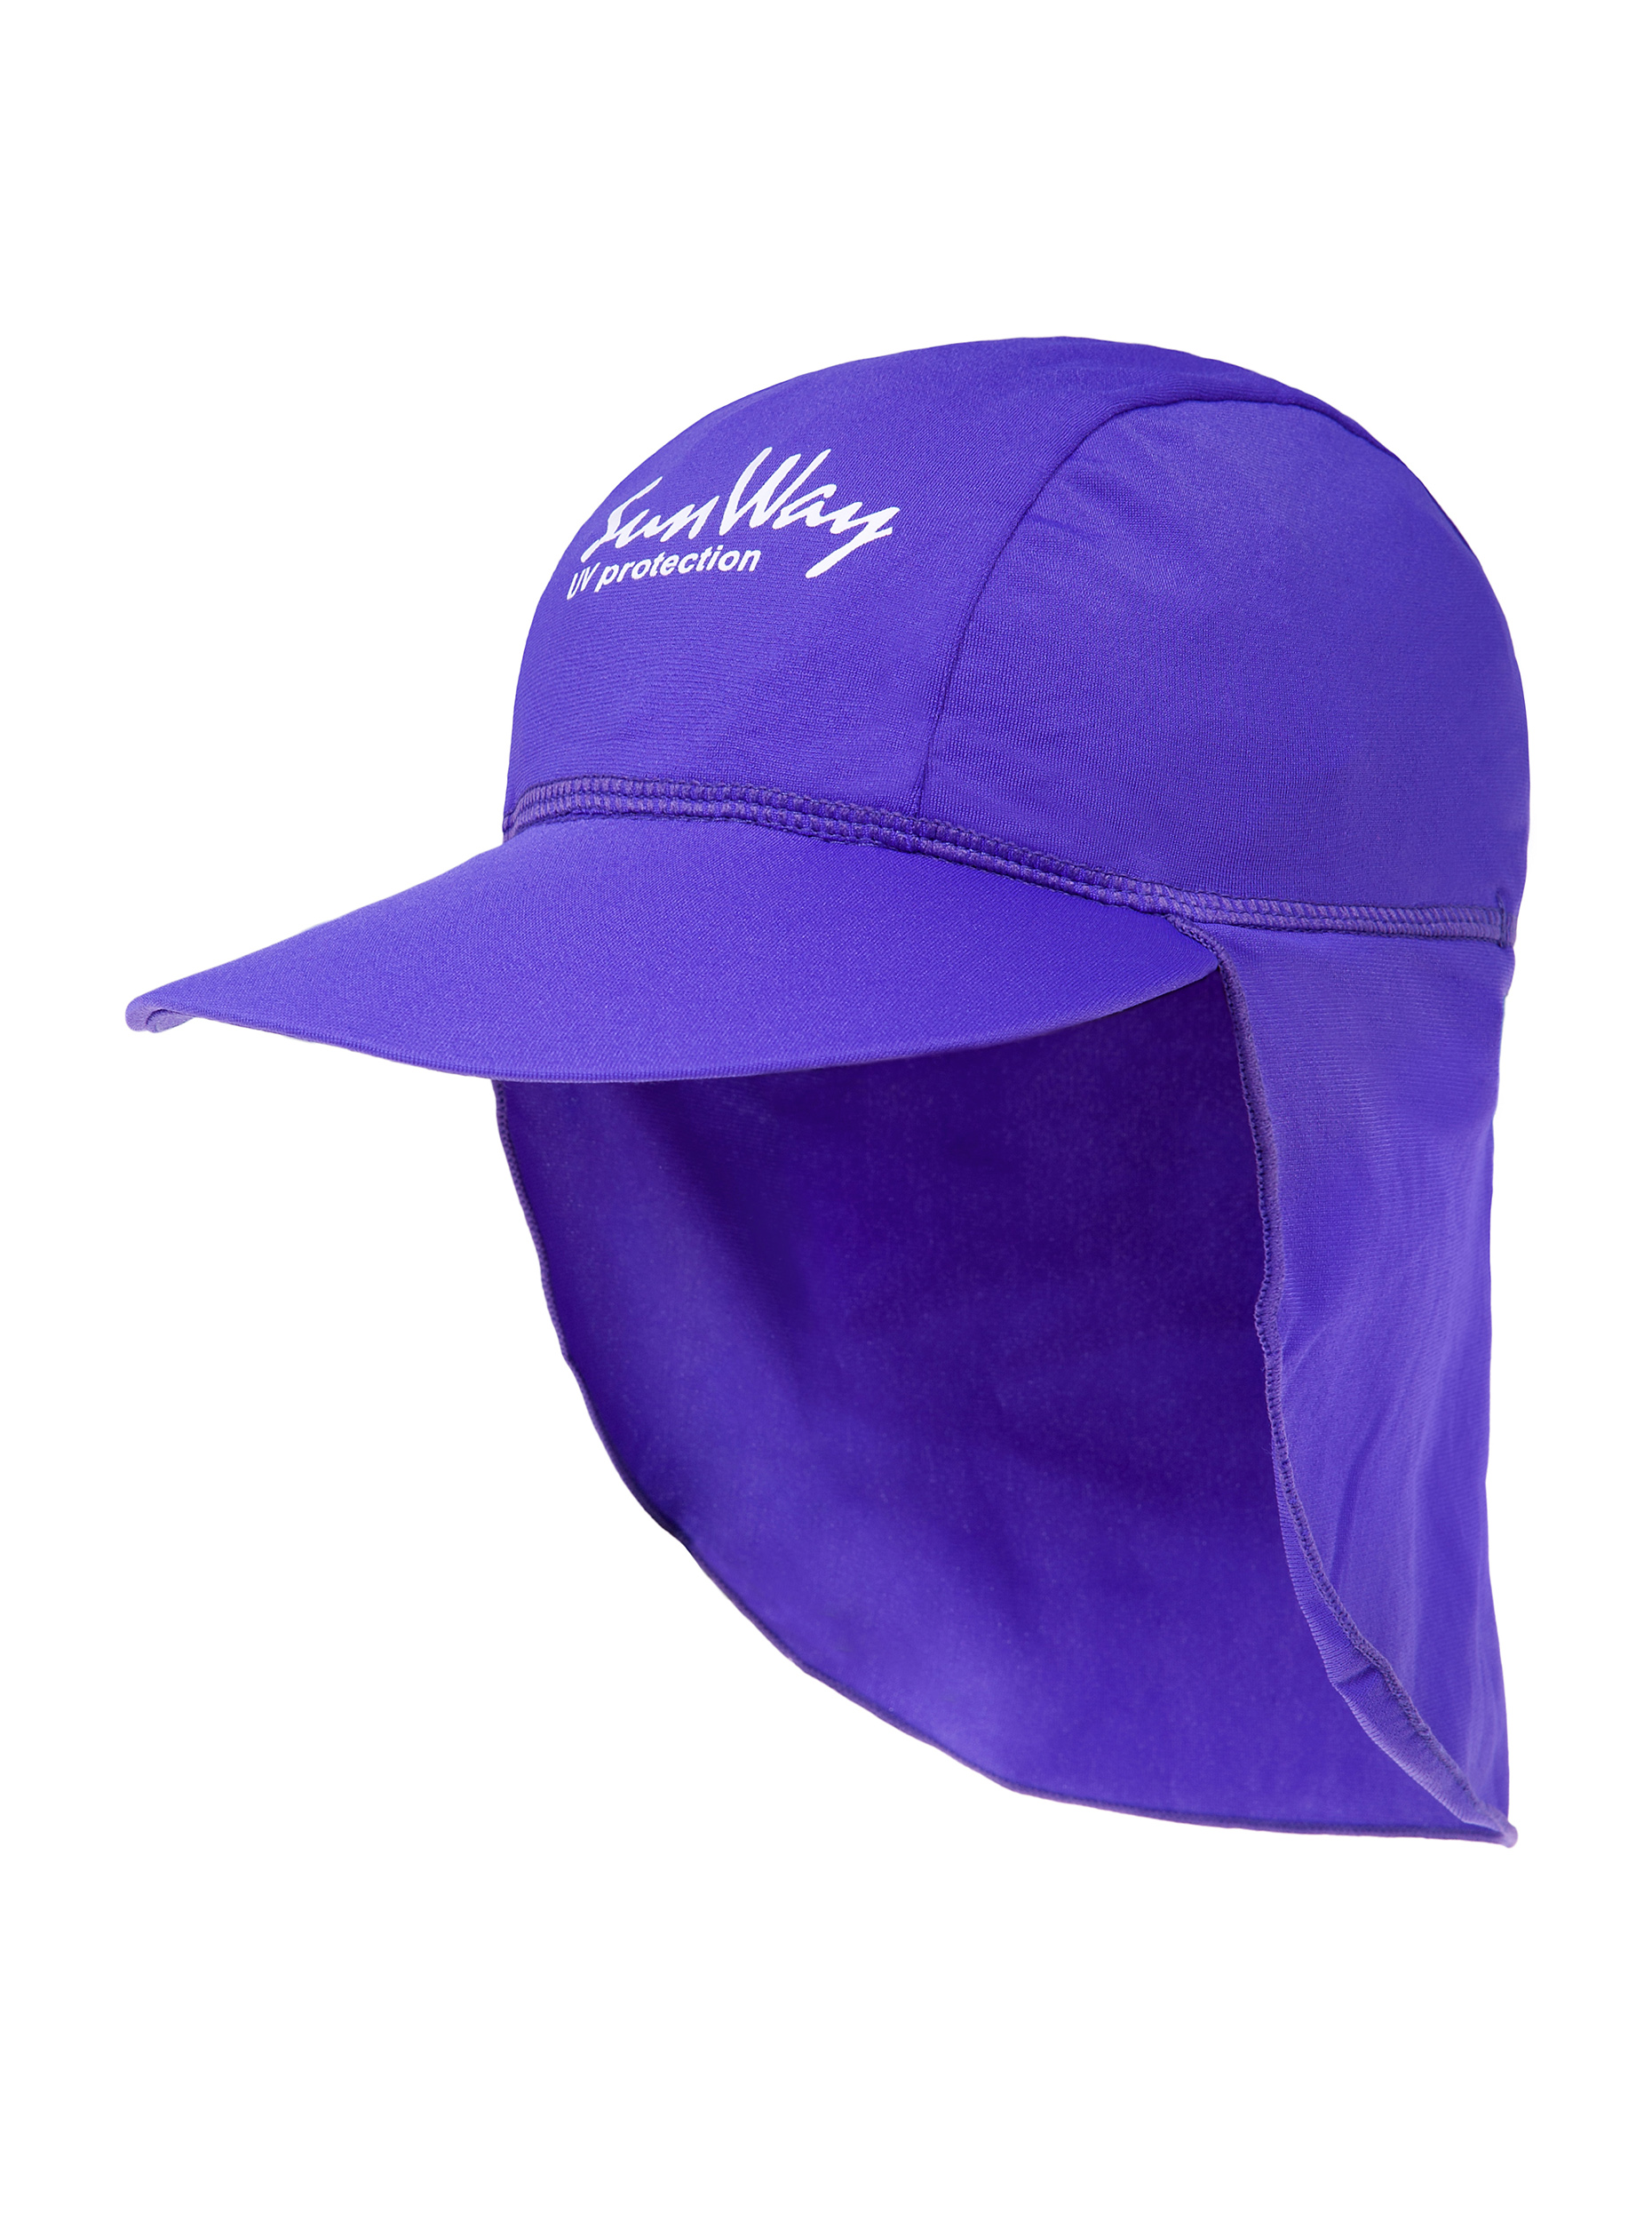 SunWay's Purple Legionnaire Hat